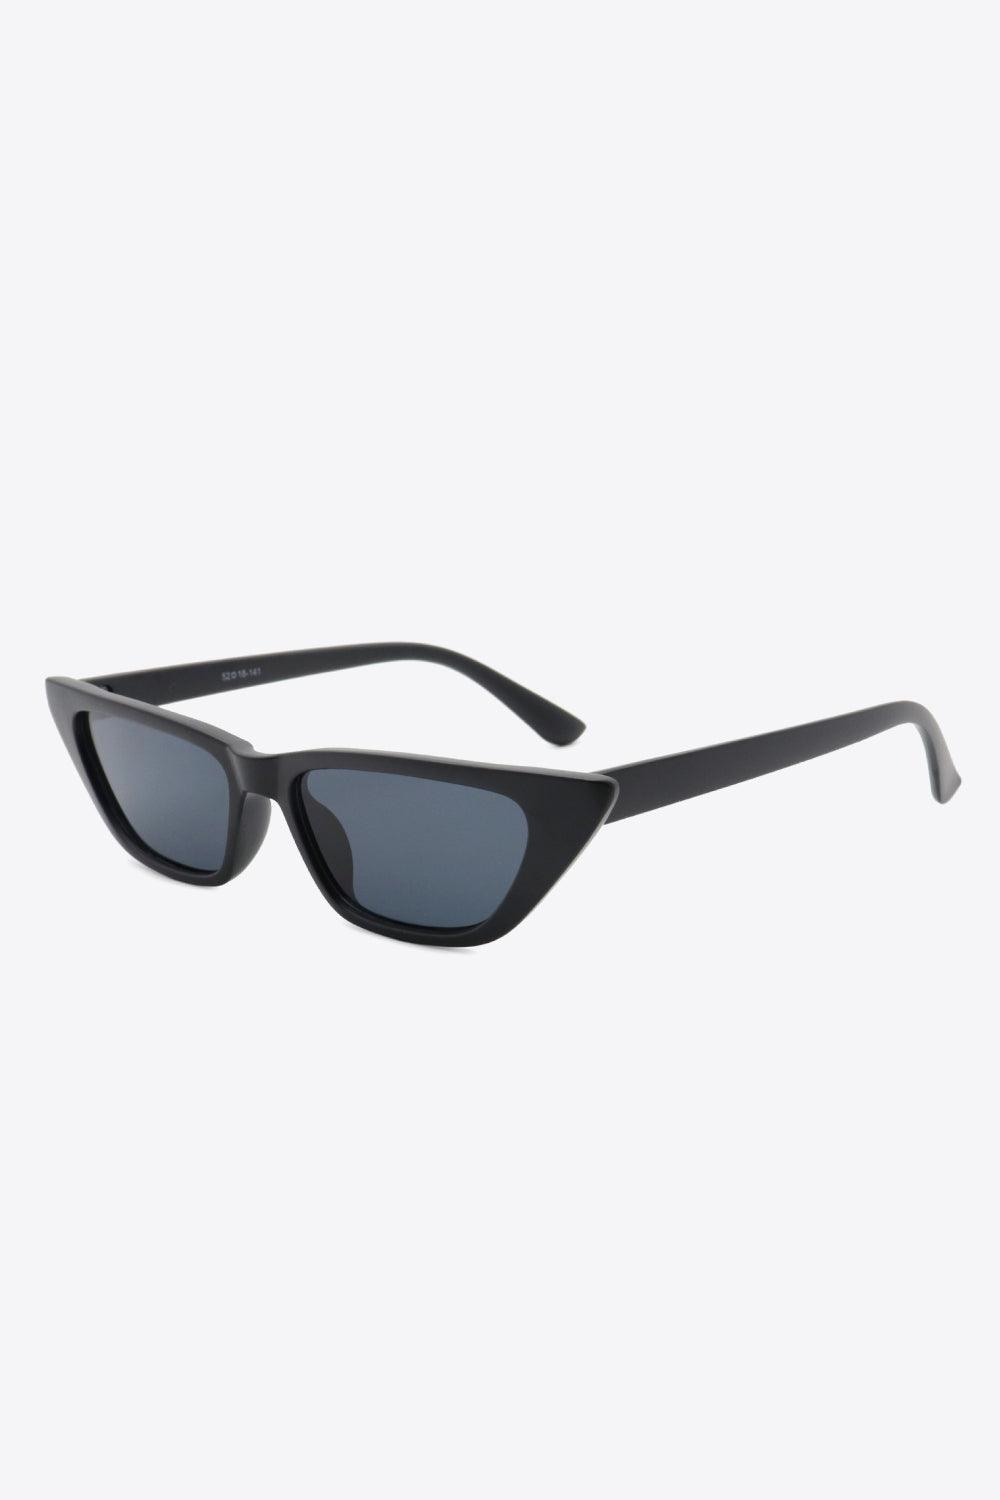 Look Fantastic Black Cat Eye Polycarbonate Sunglasses - MXSTUDIO.COM